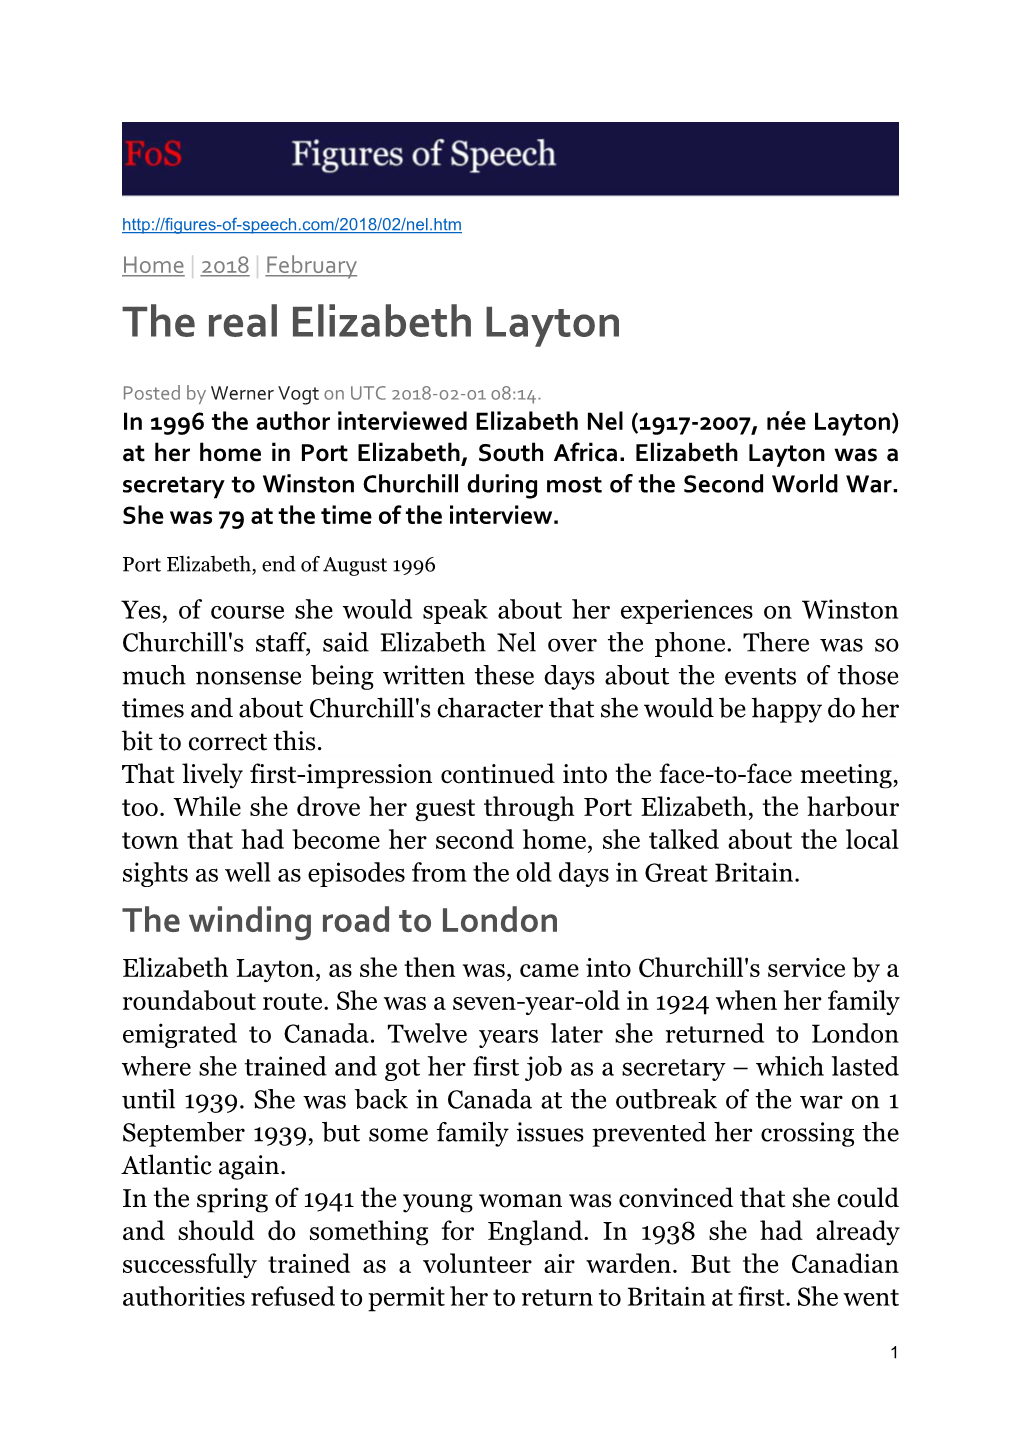 The Real Elizabeth Layton